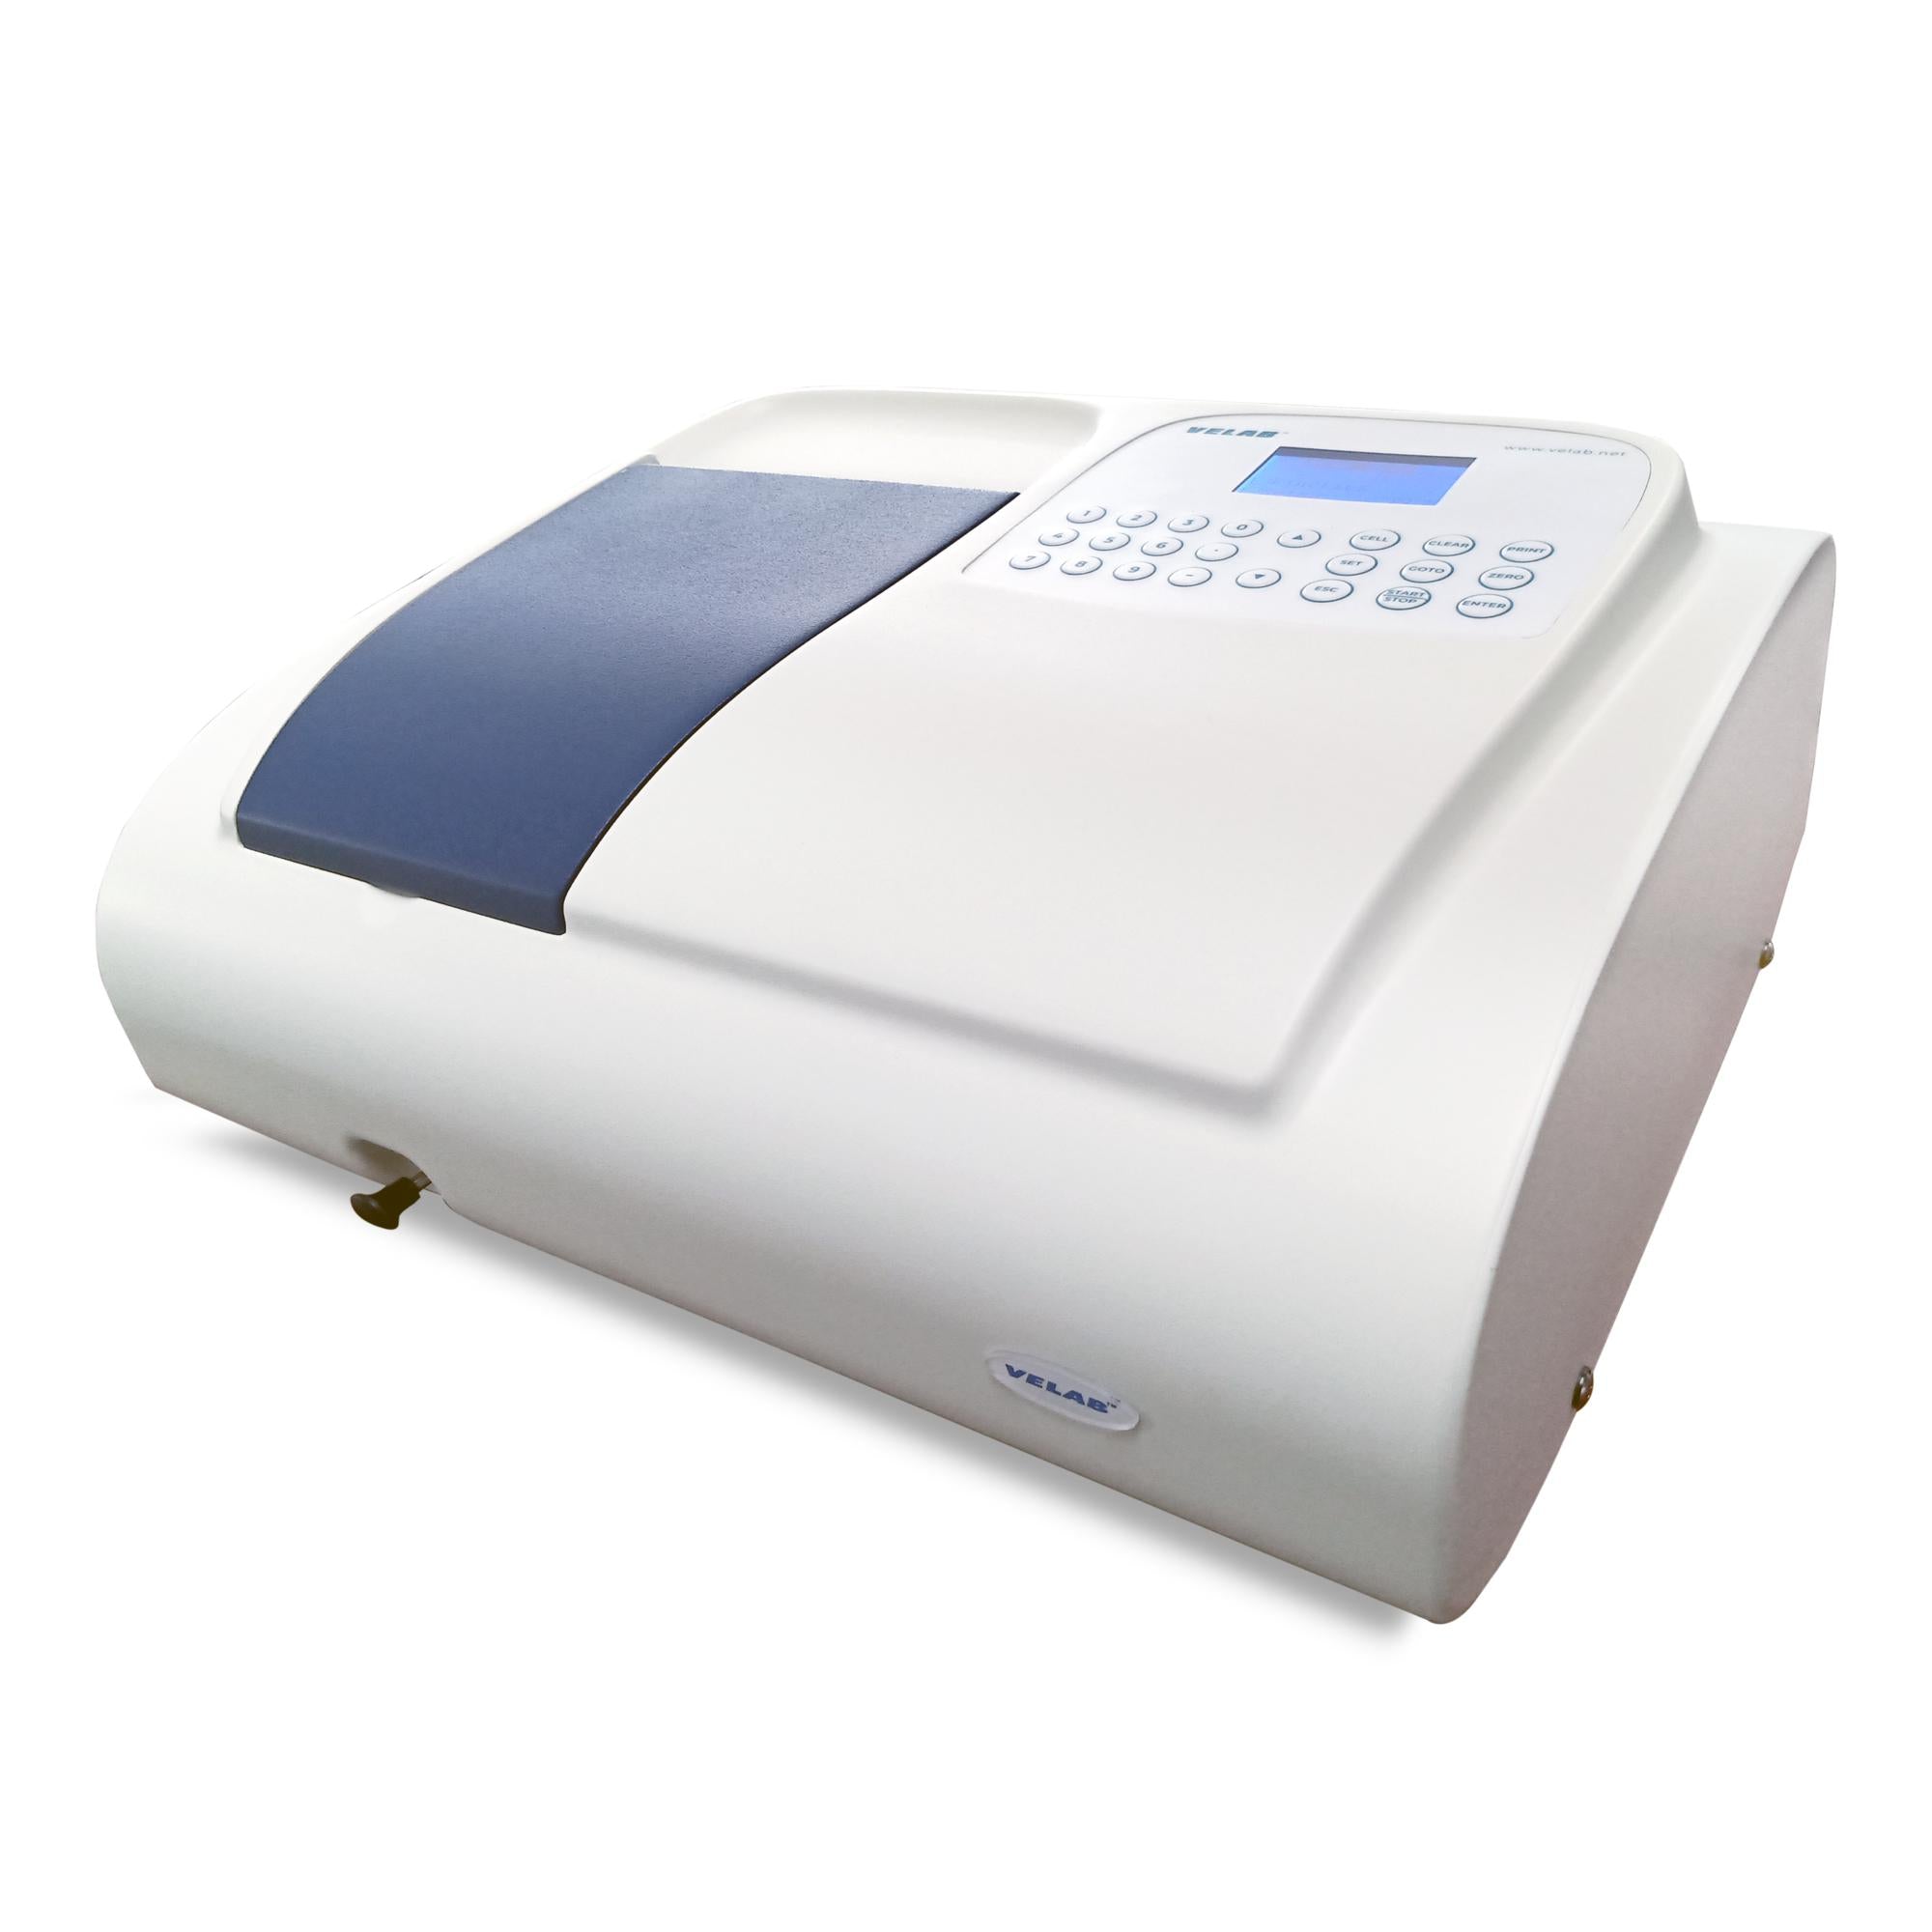 VELAB UV-VIS PC Spectrophotometer